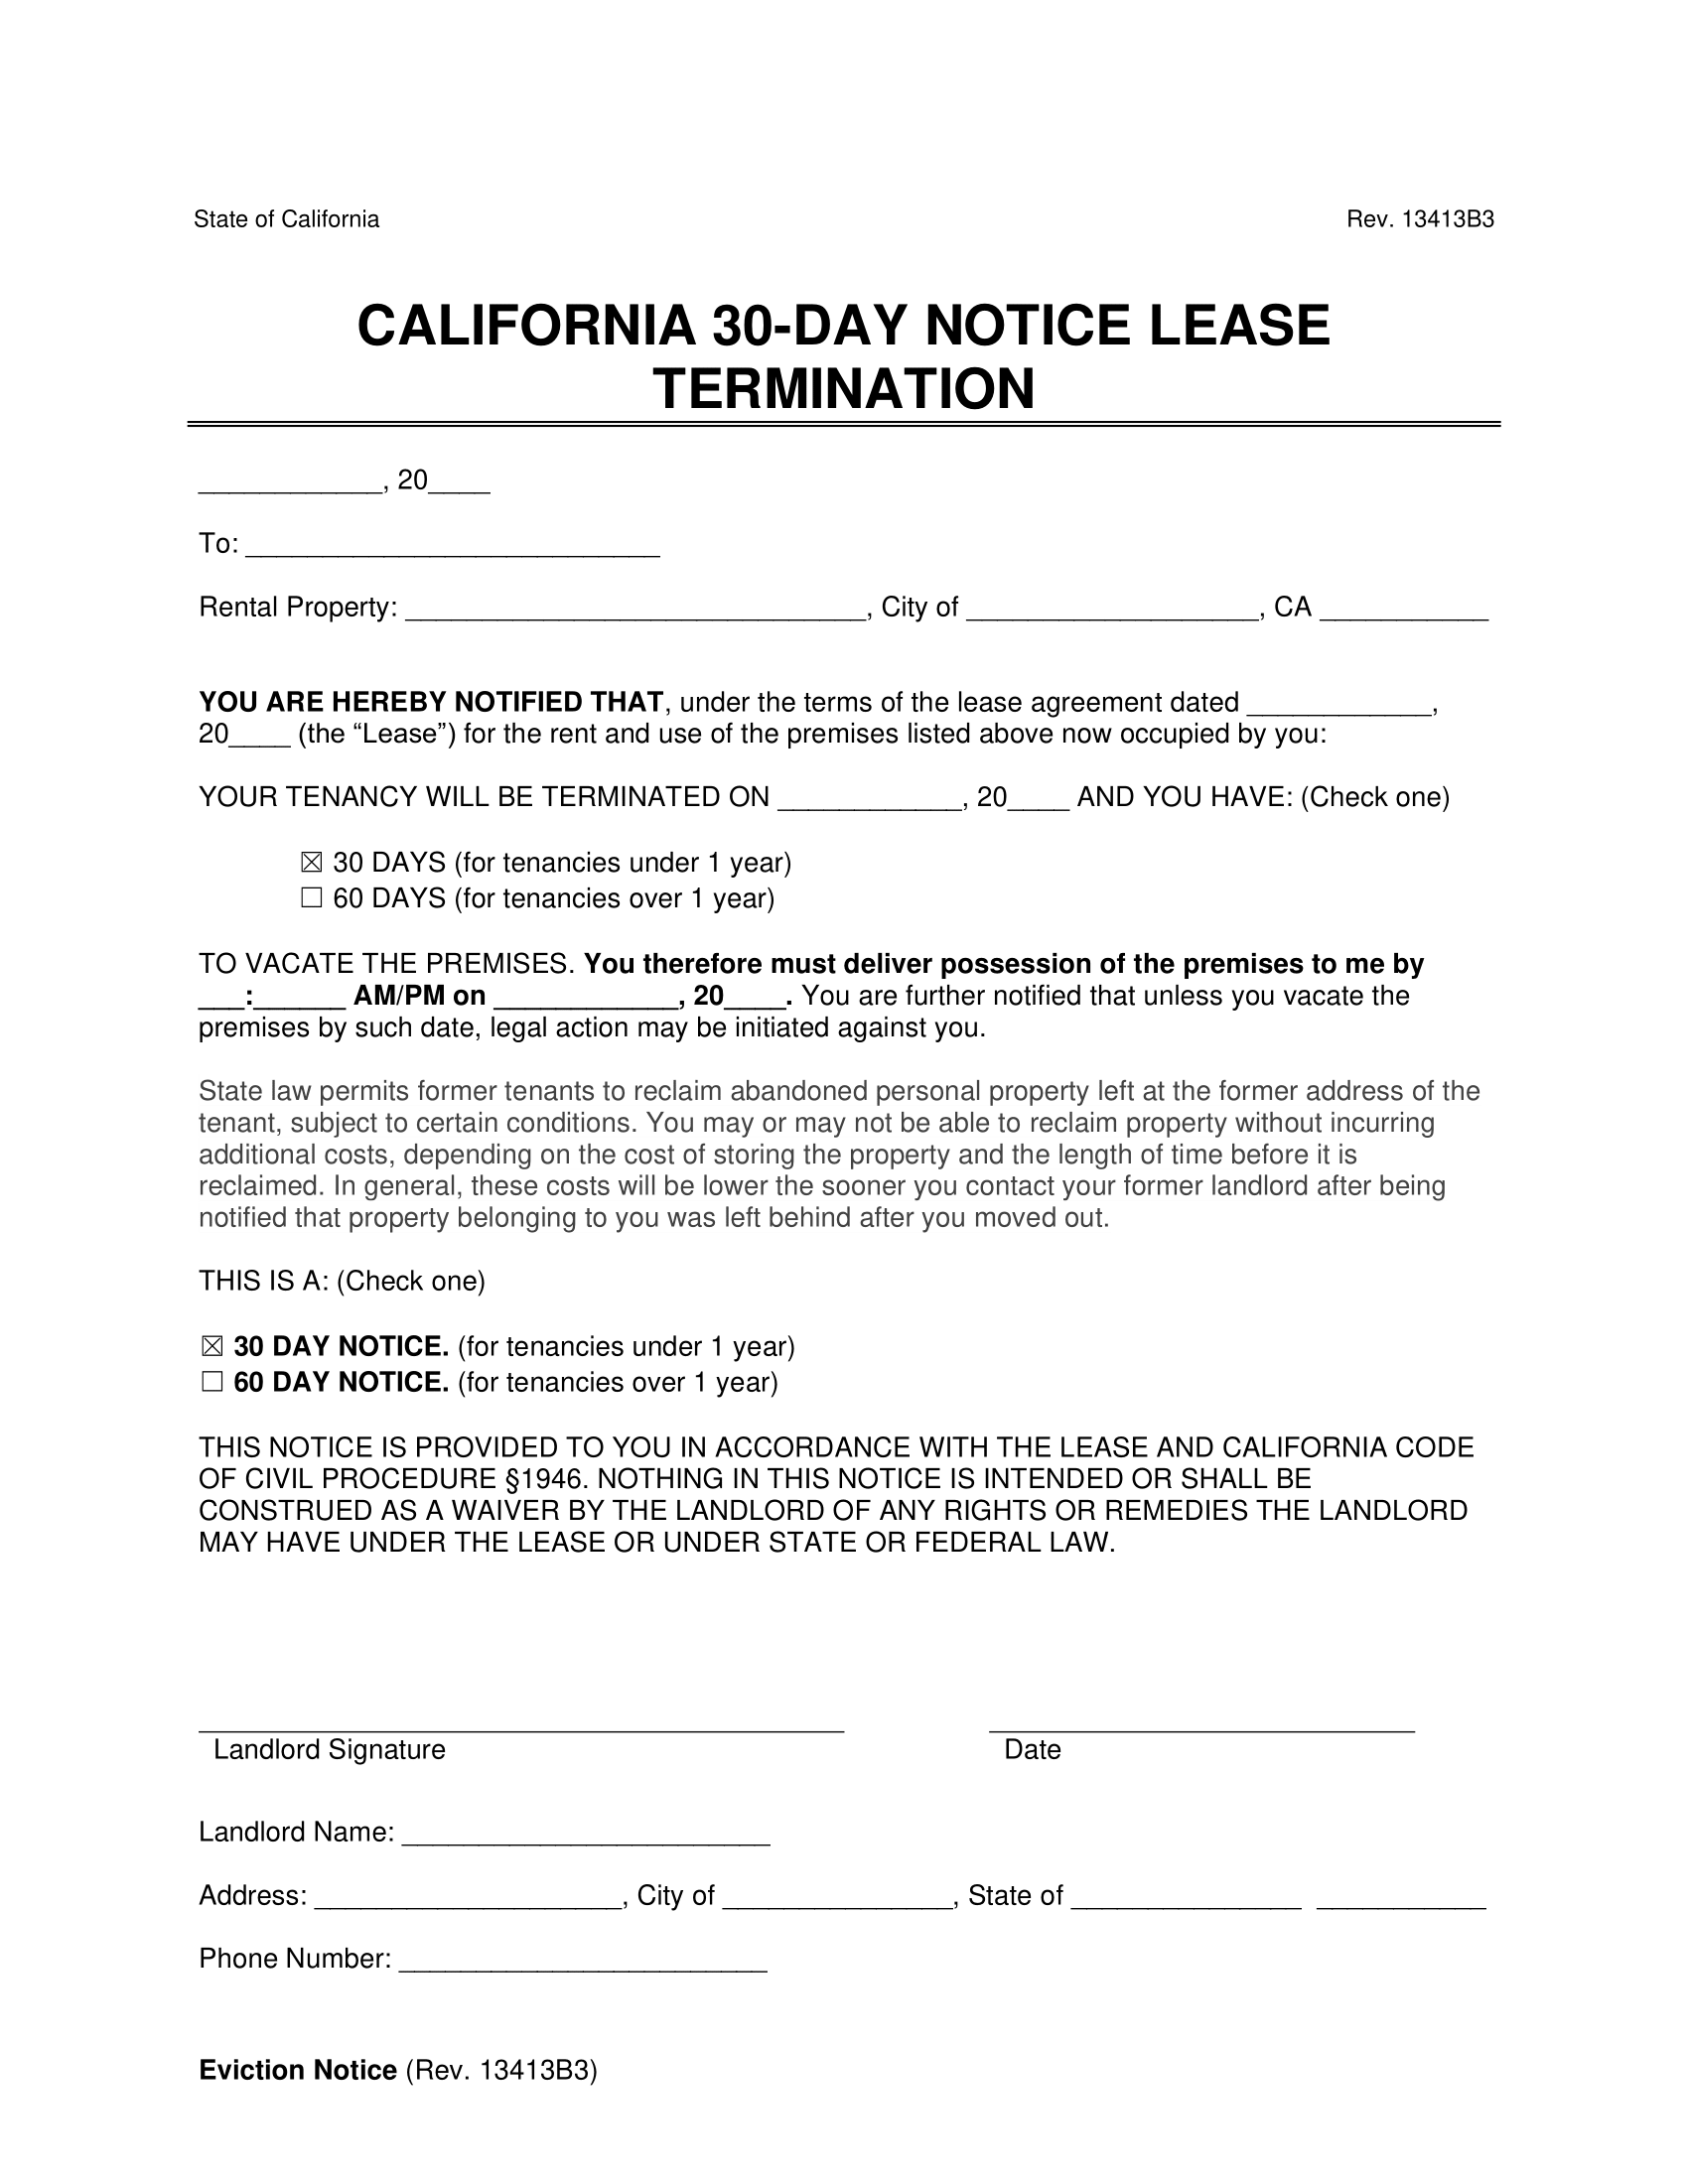 California 30-Day Notice Lease Termination